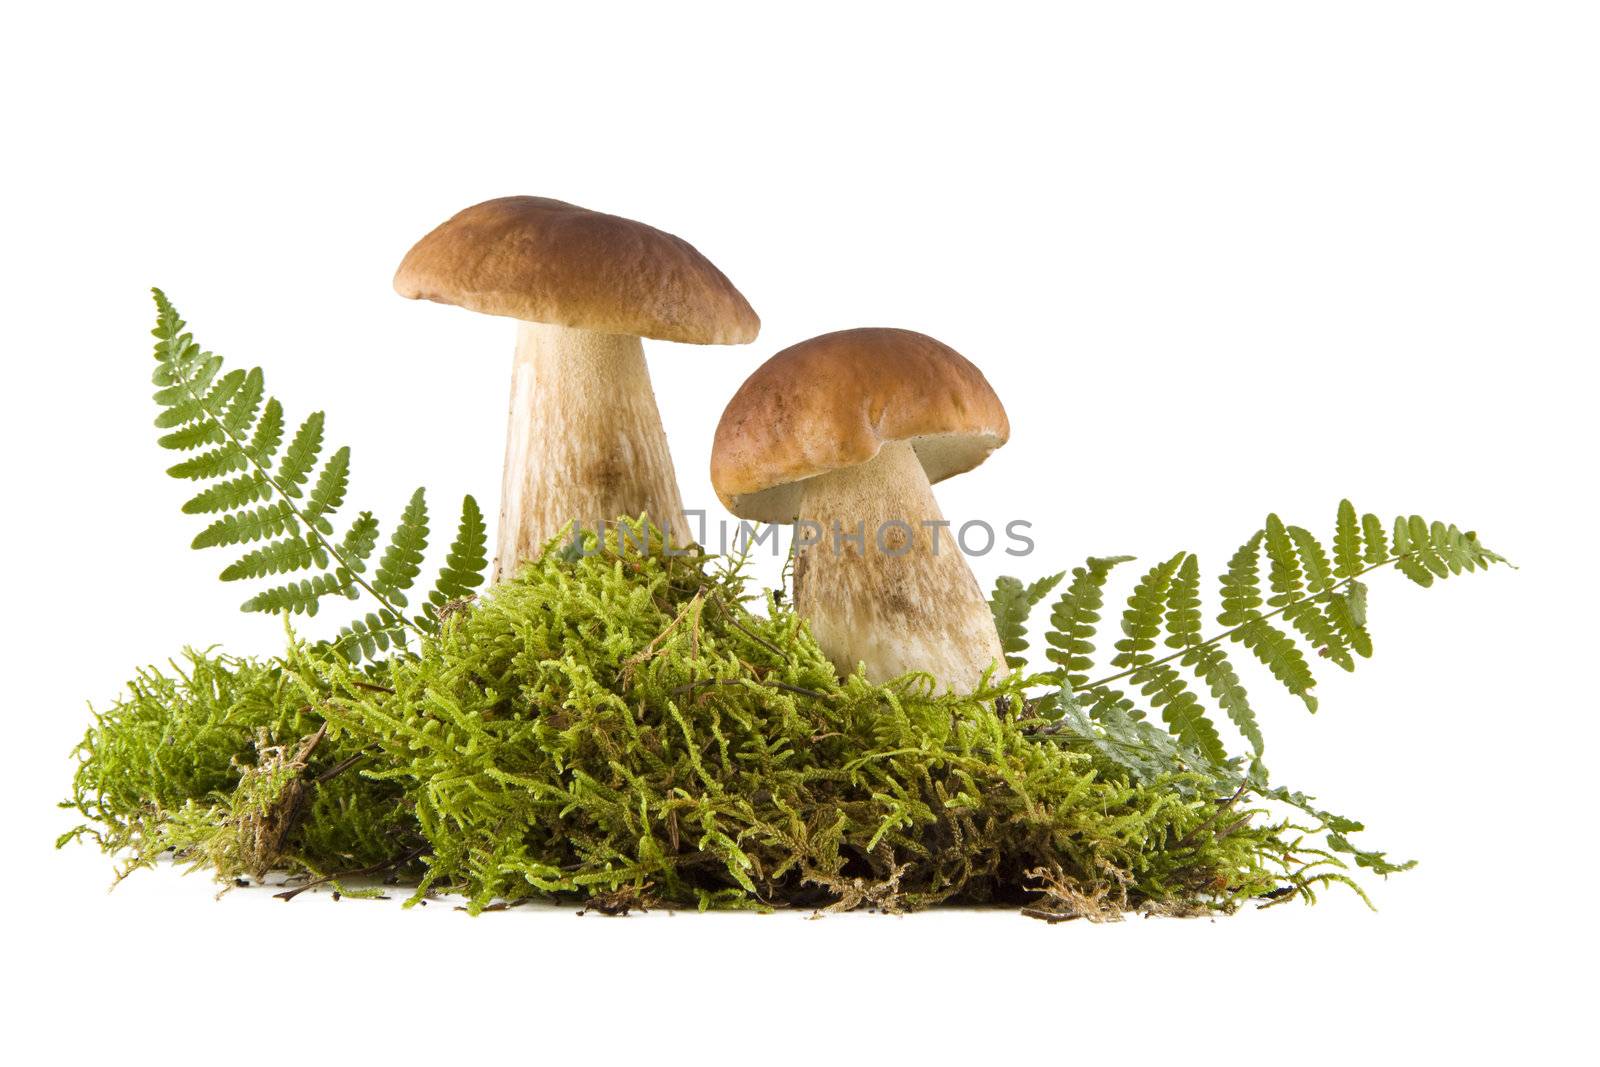 Two fresh mushrooms by Gbuglok